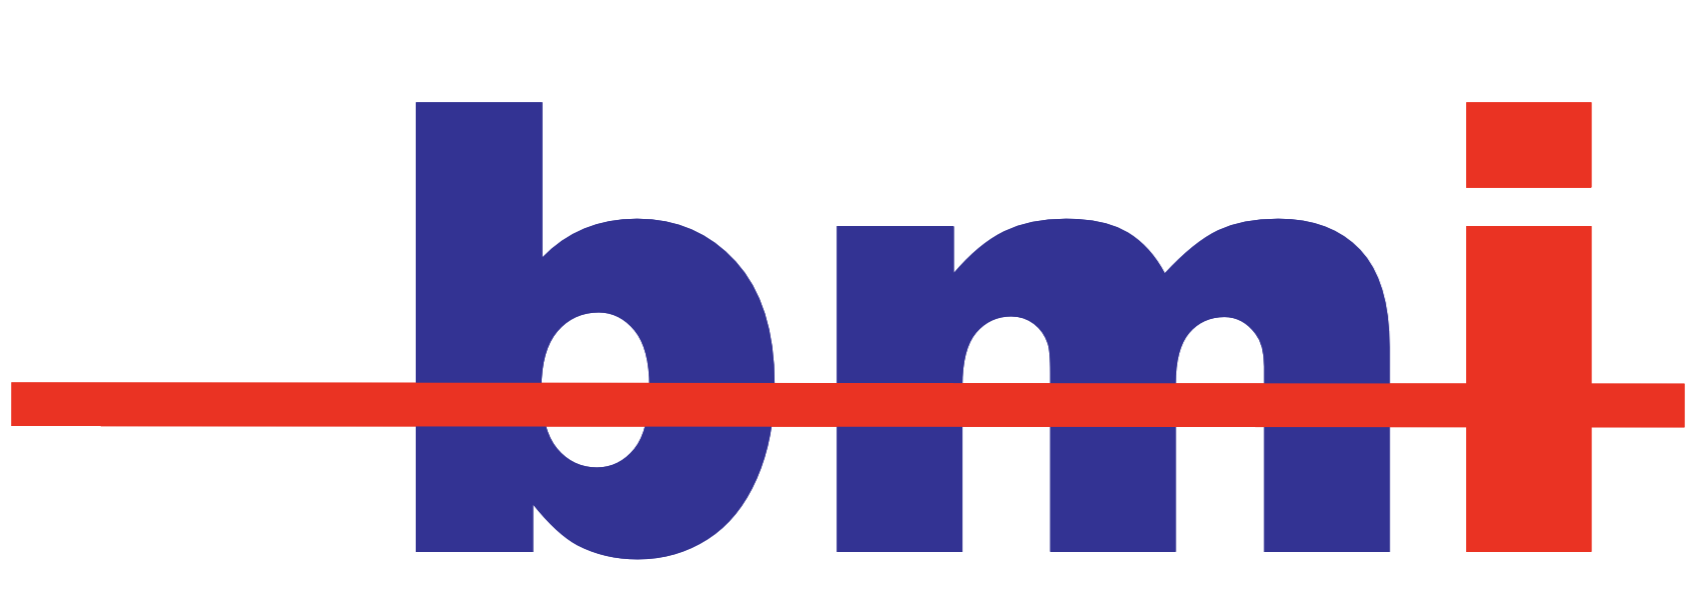 Bulk Materials, Inc. logo